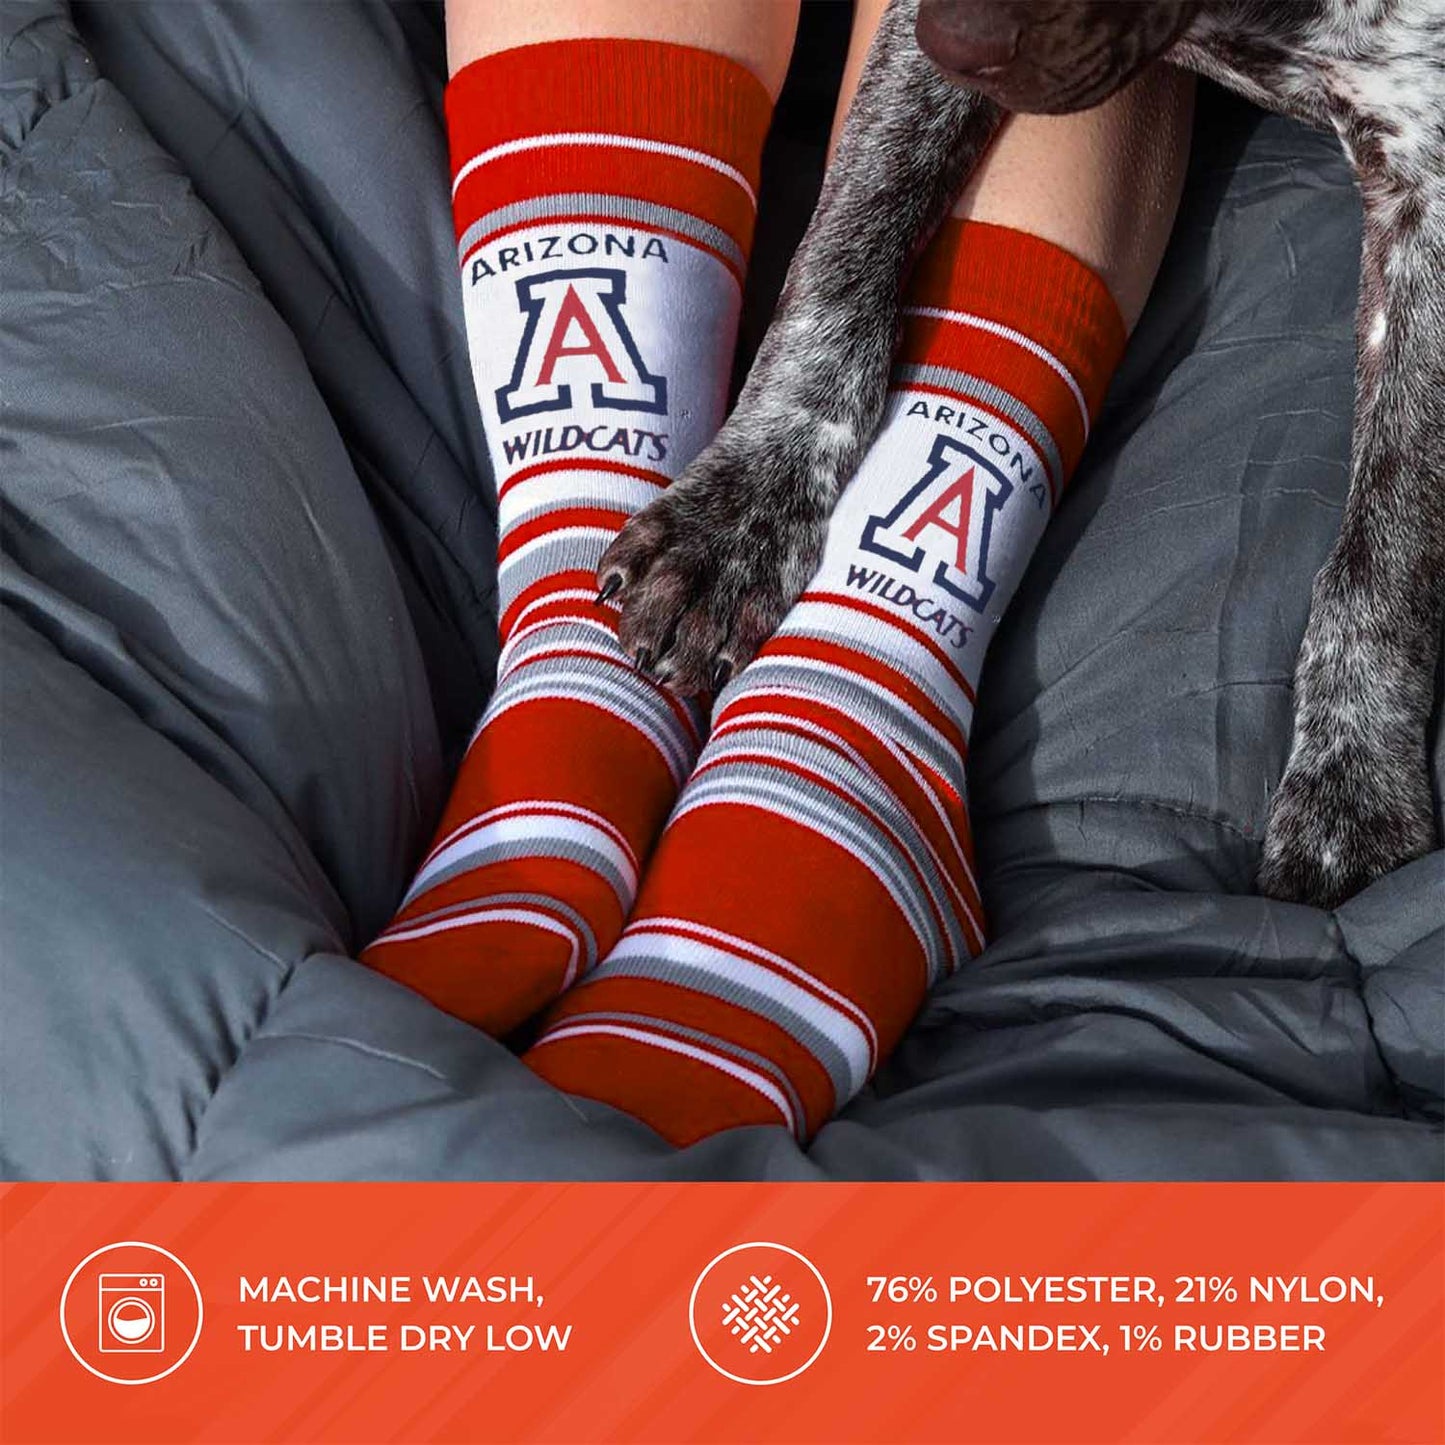 Arizona Wildcats Collegiate University Striped Dress Socks - Red